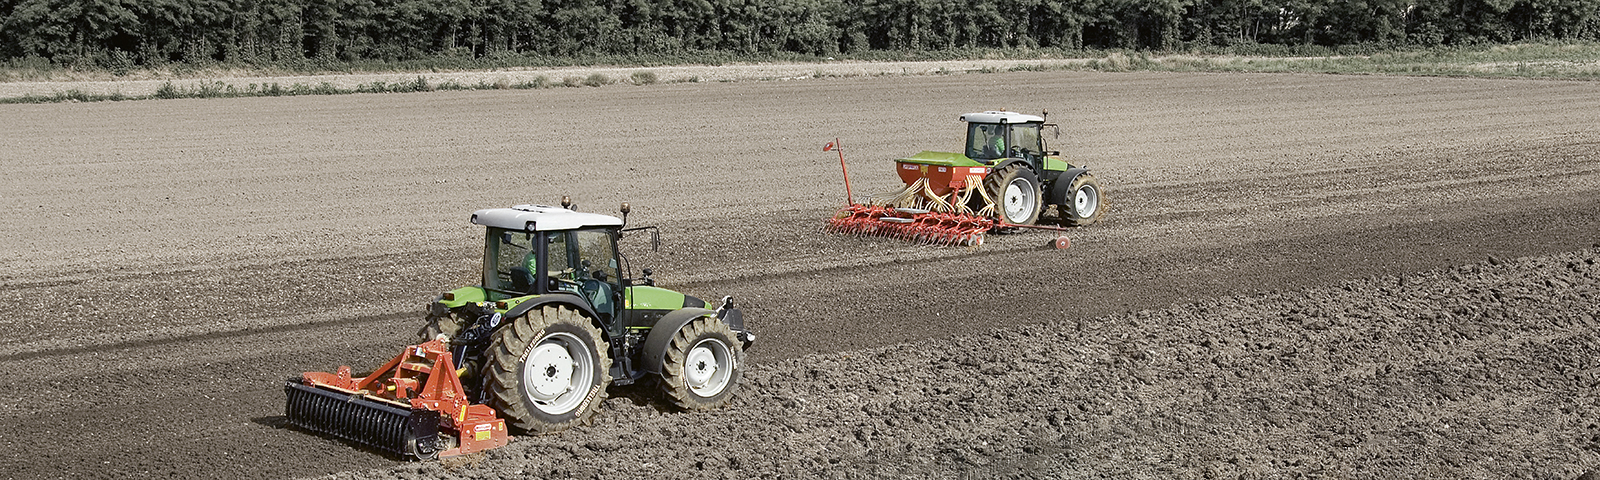 Deutz Fahr Agrofarm G 410 tractor